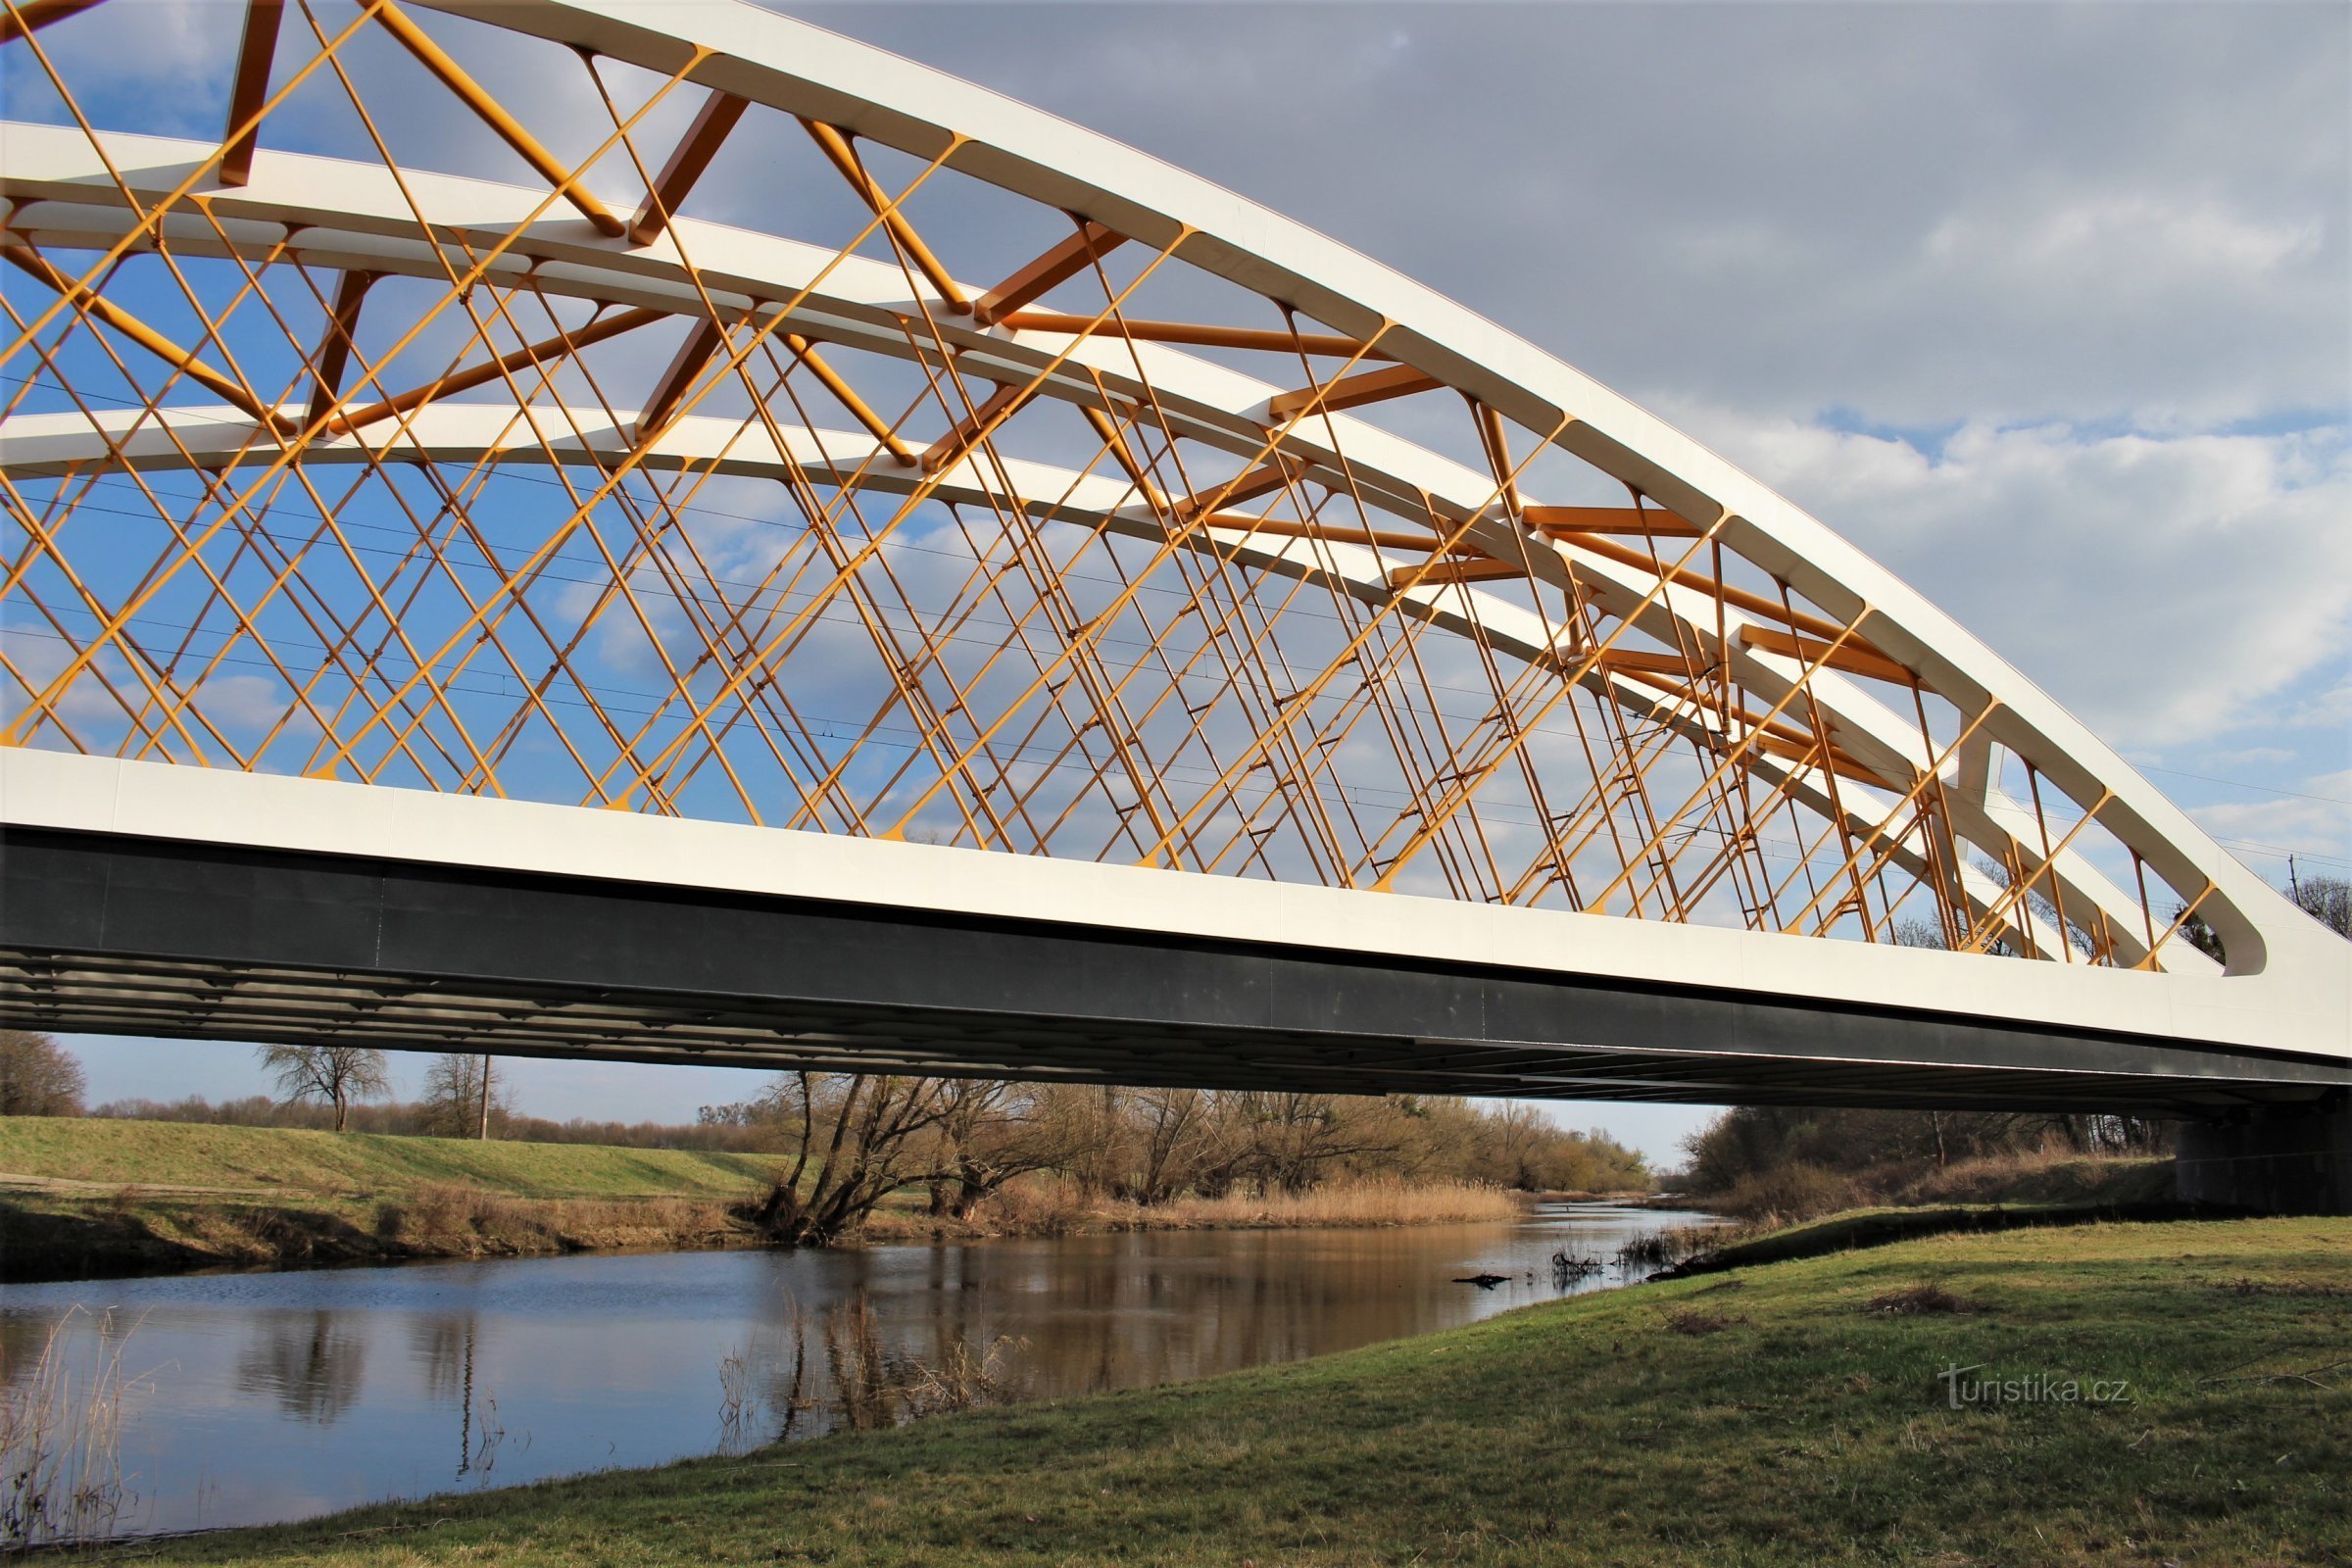 Oskar Bridge, detalje af brostrukturen